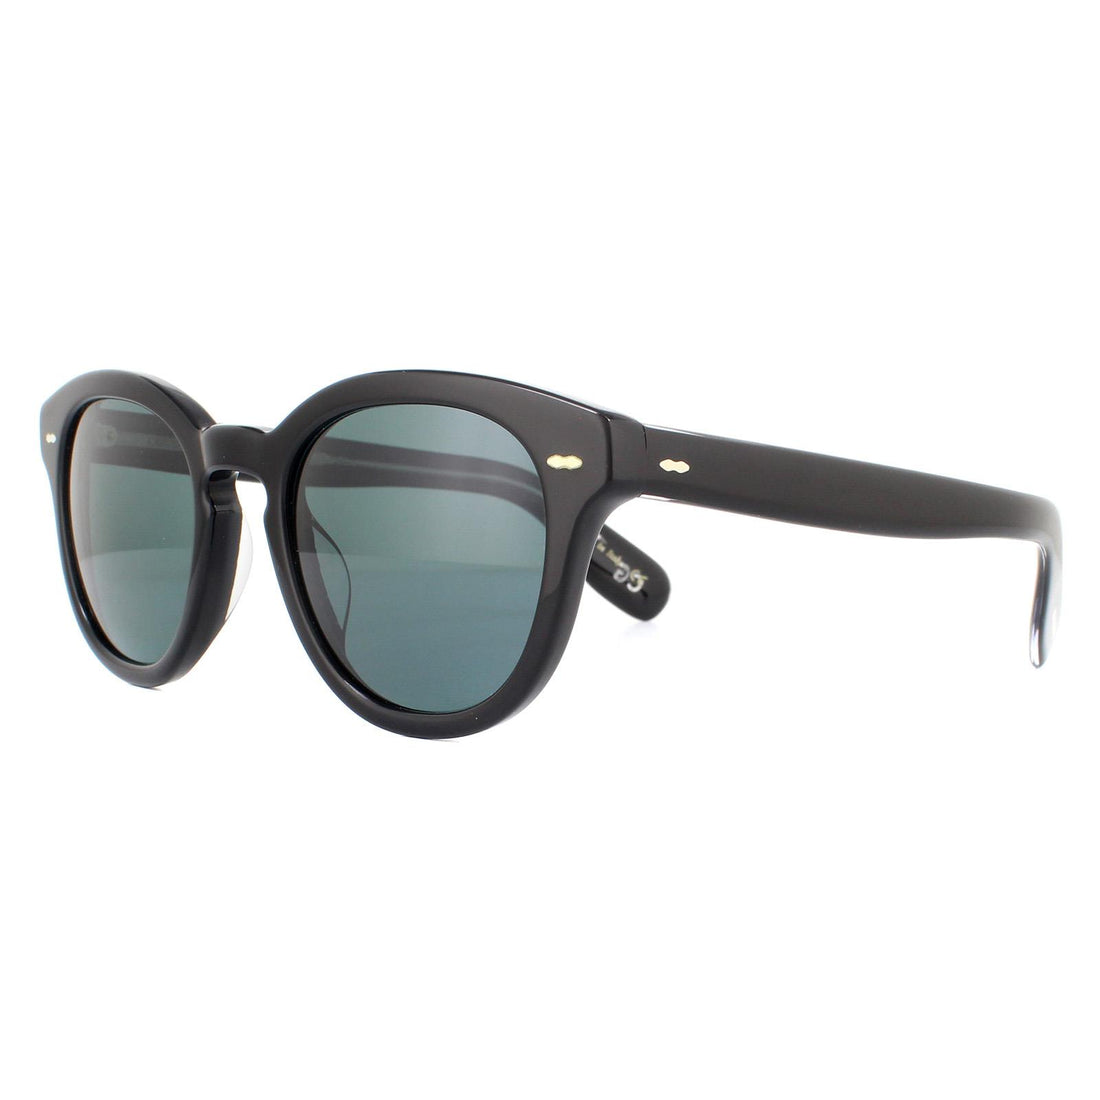 Oliver Peoples Sunglasses Cary Grant OV5413SU 14923R Black Blue Polarized